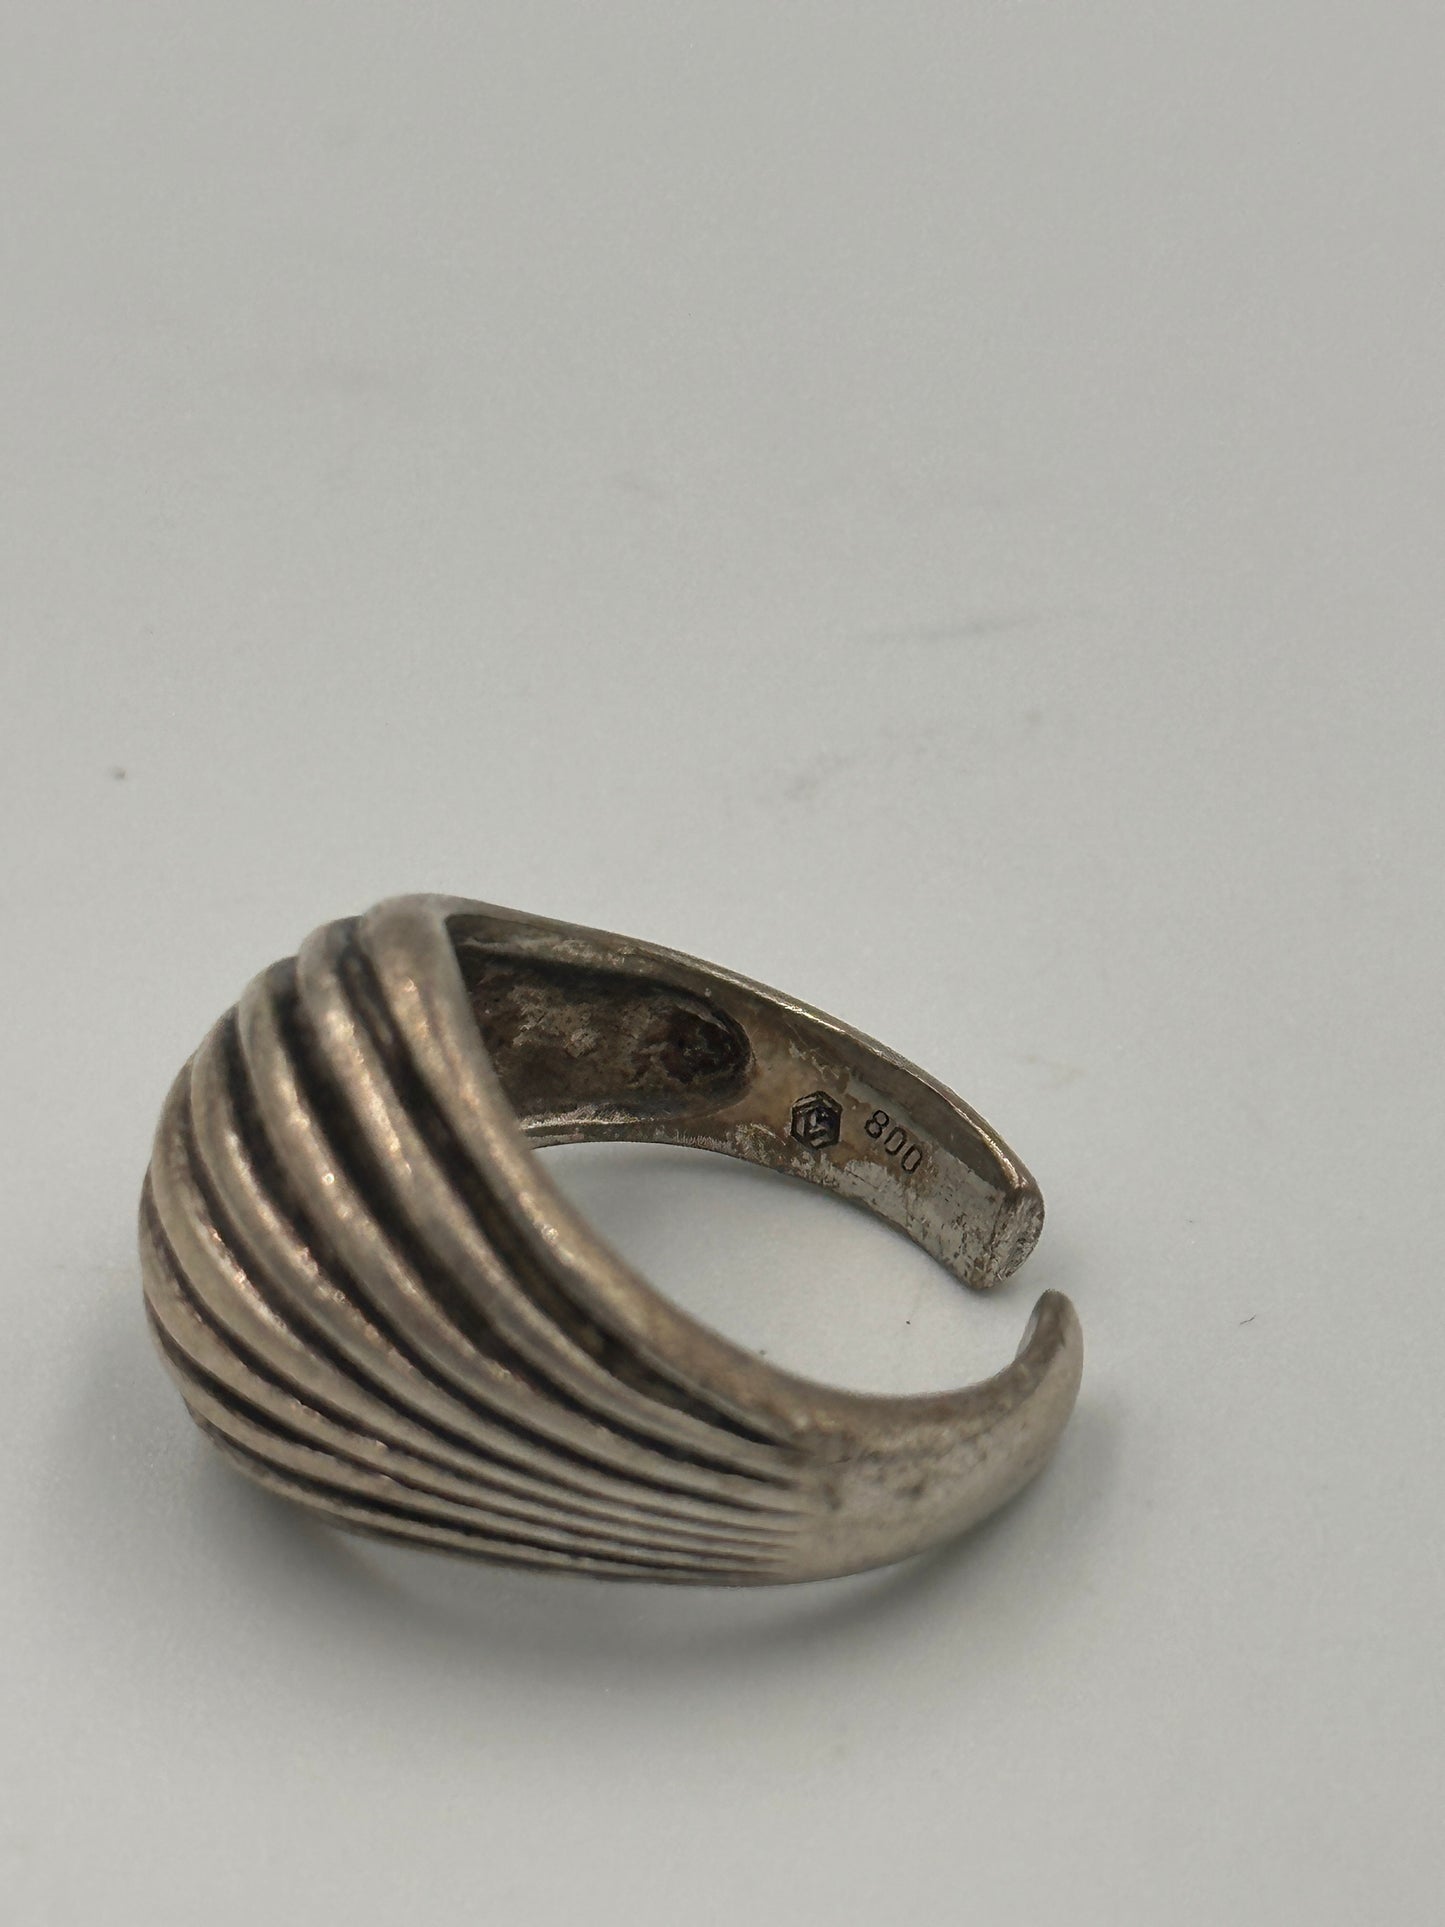 Vintage Silber (800) Ring in Wellenform